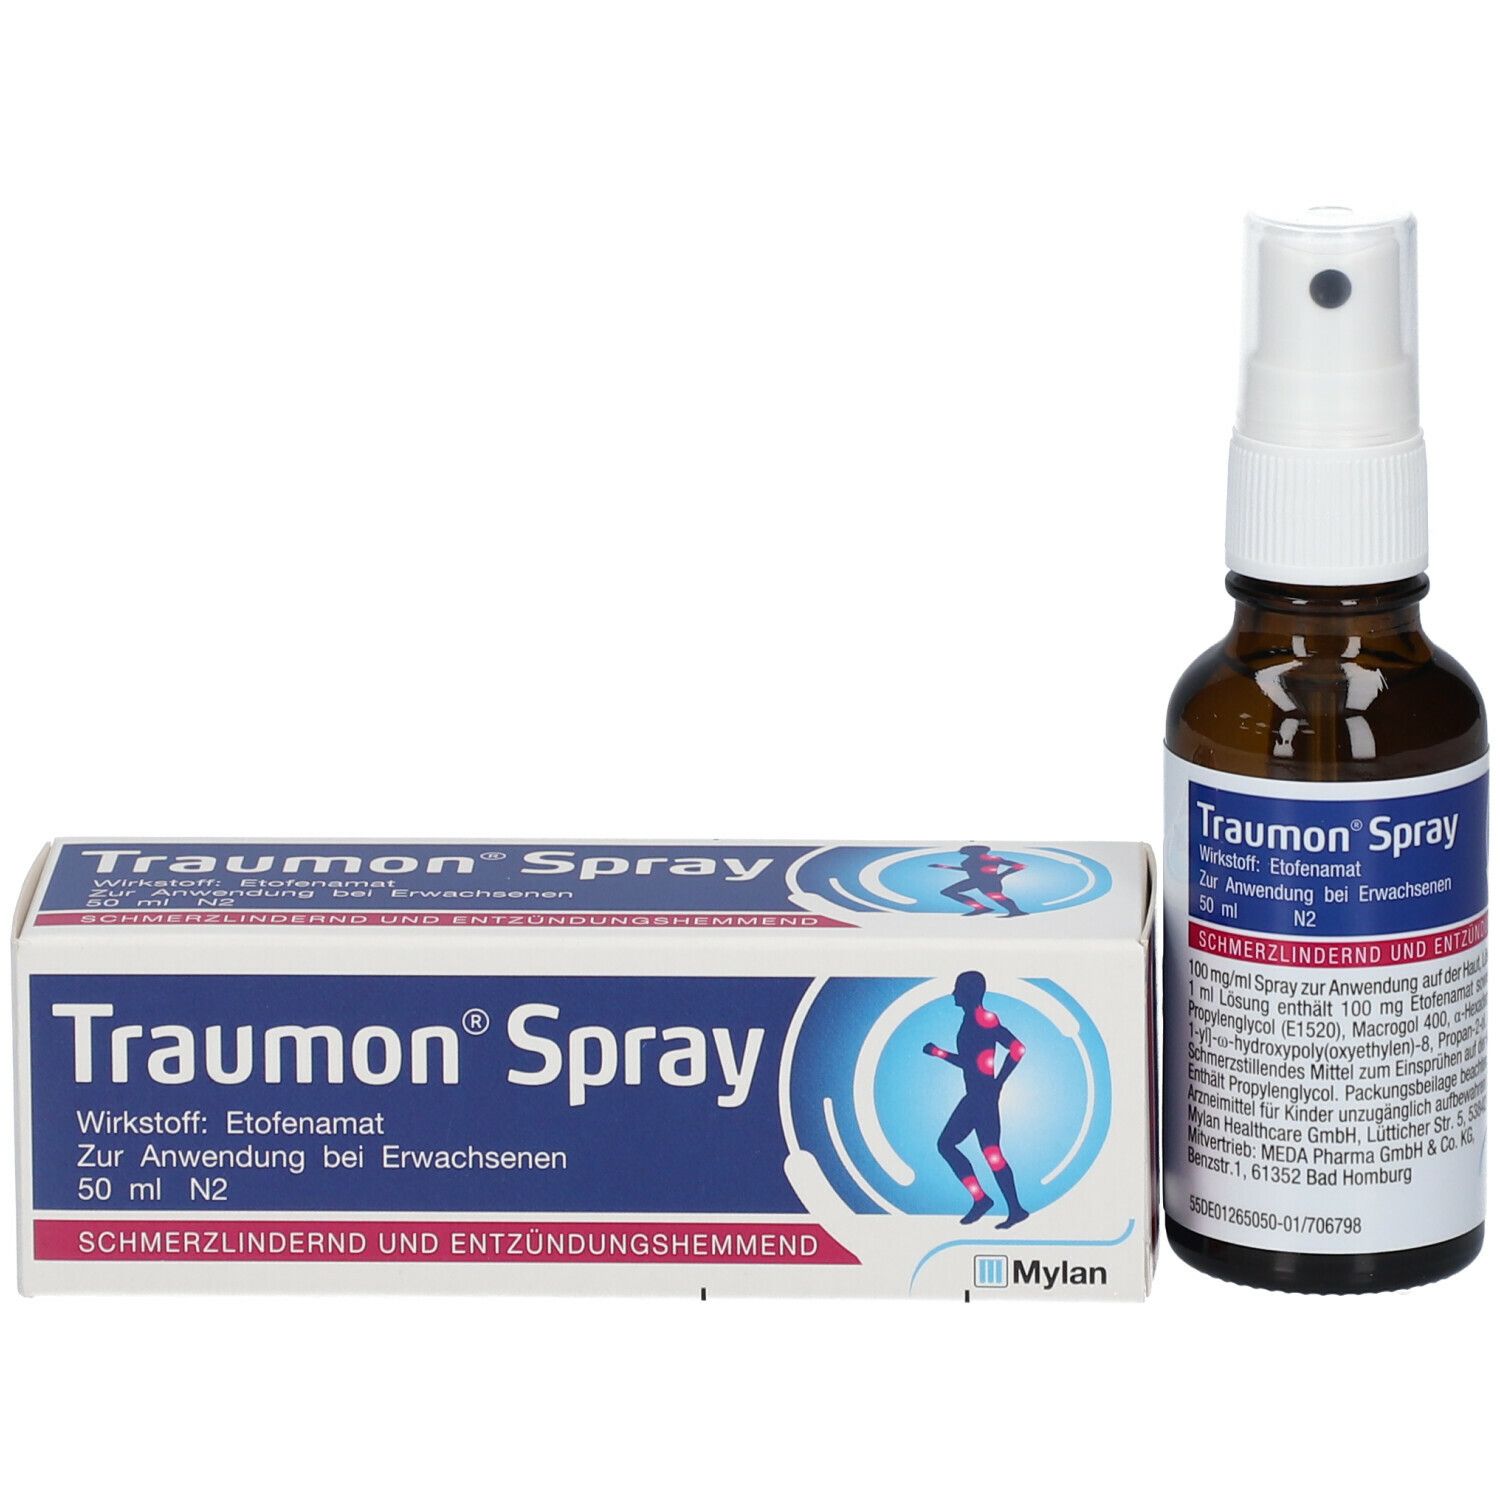 Traumon® Spray